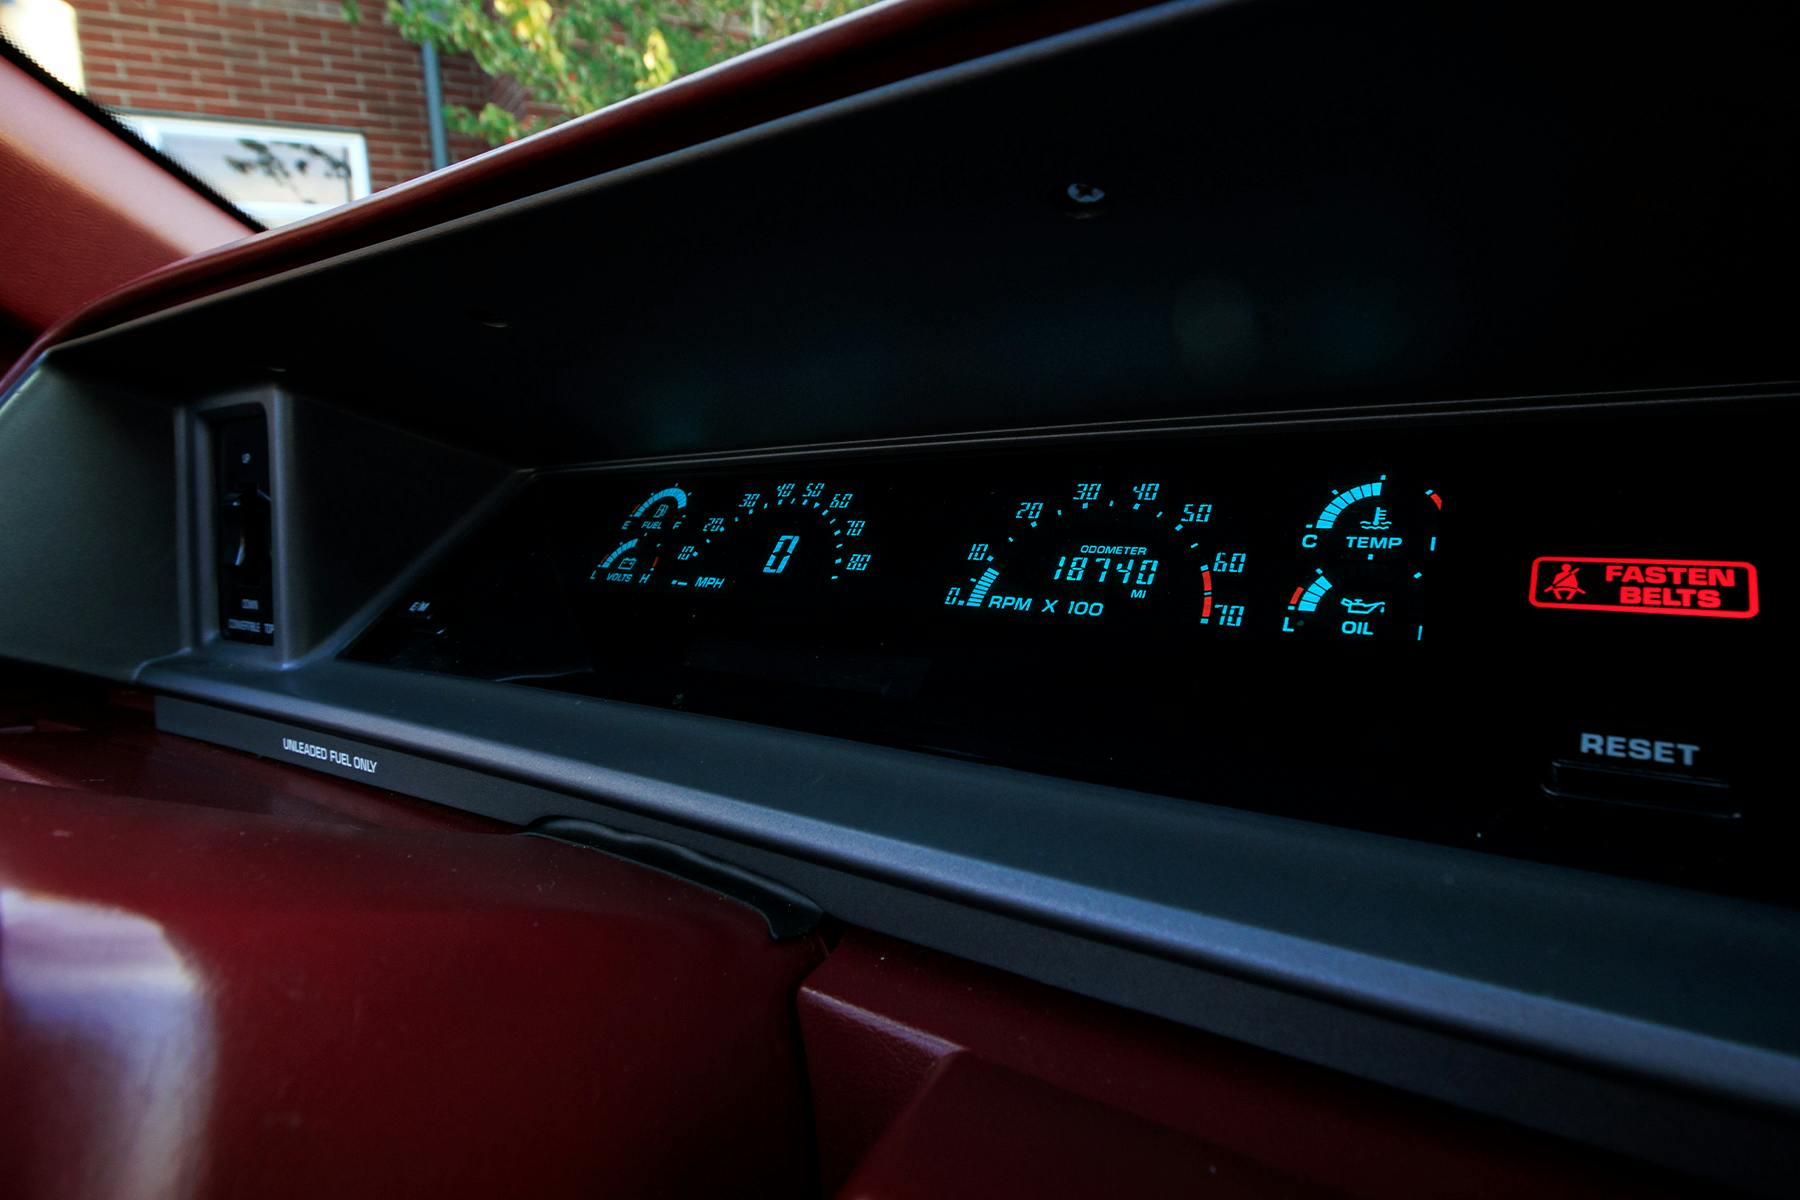 1991 Oldsmobile Cutlass Supreme Convertible interior digital dash display